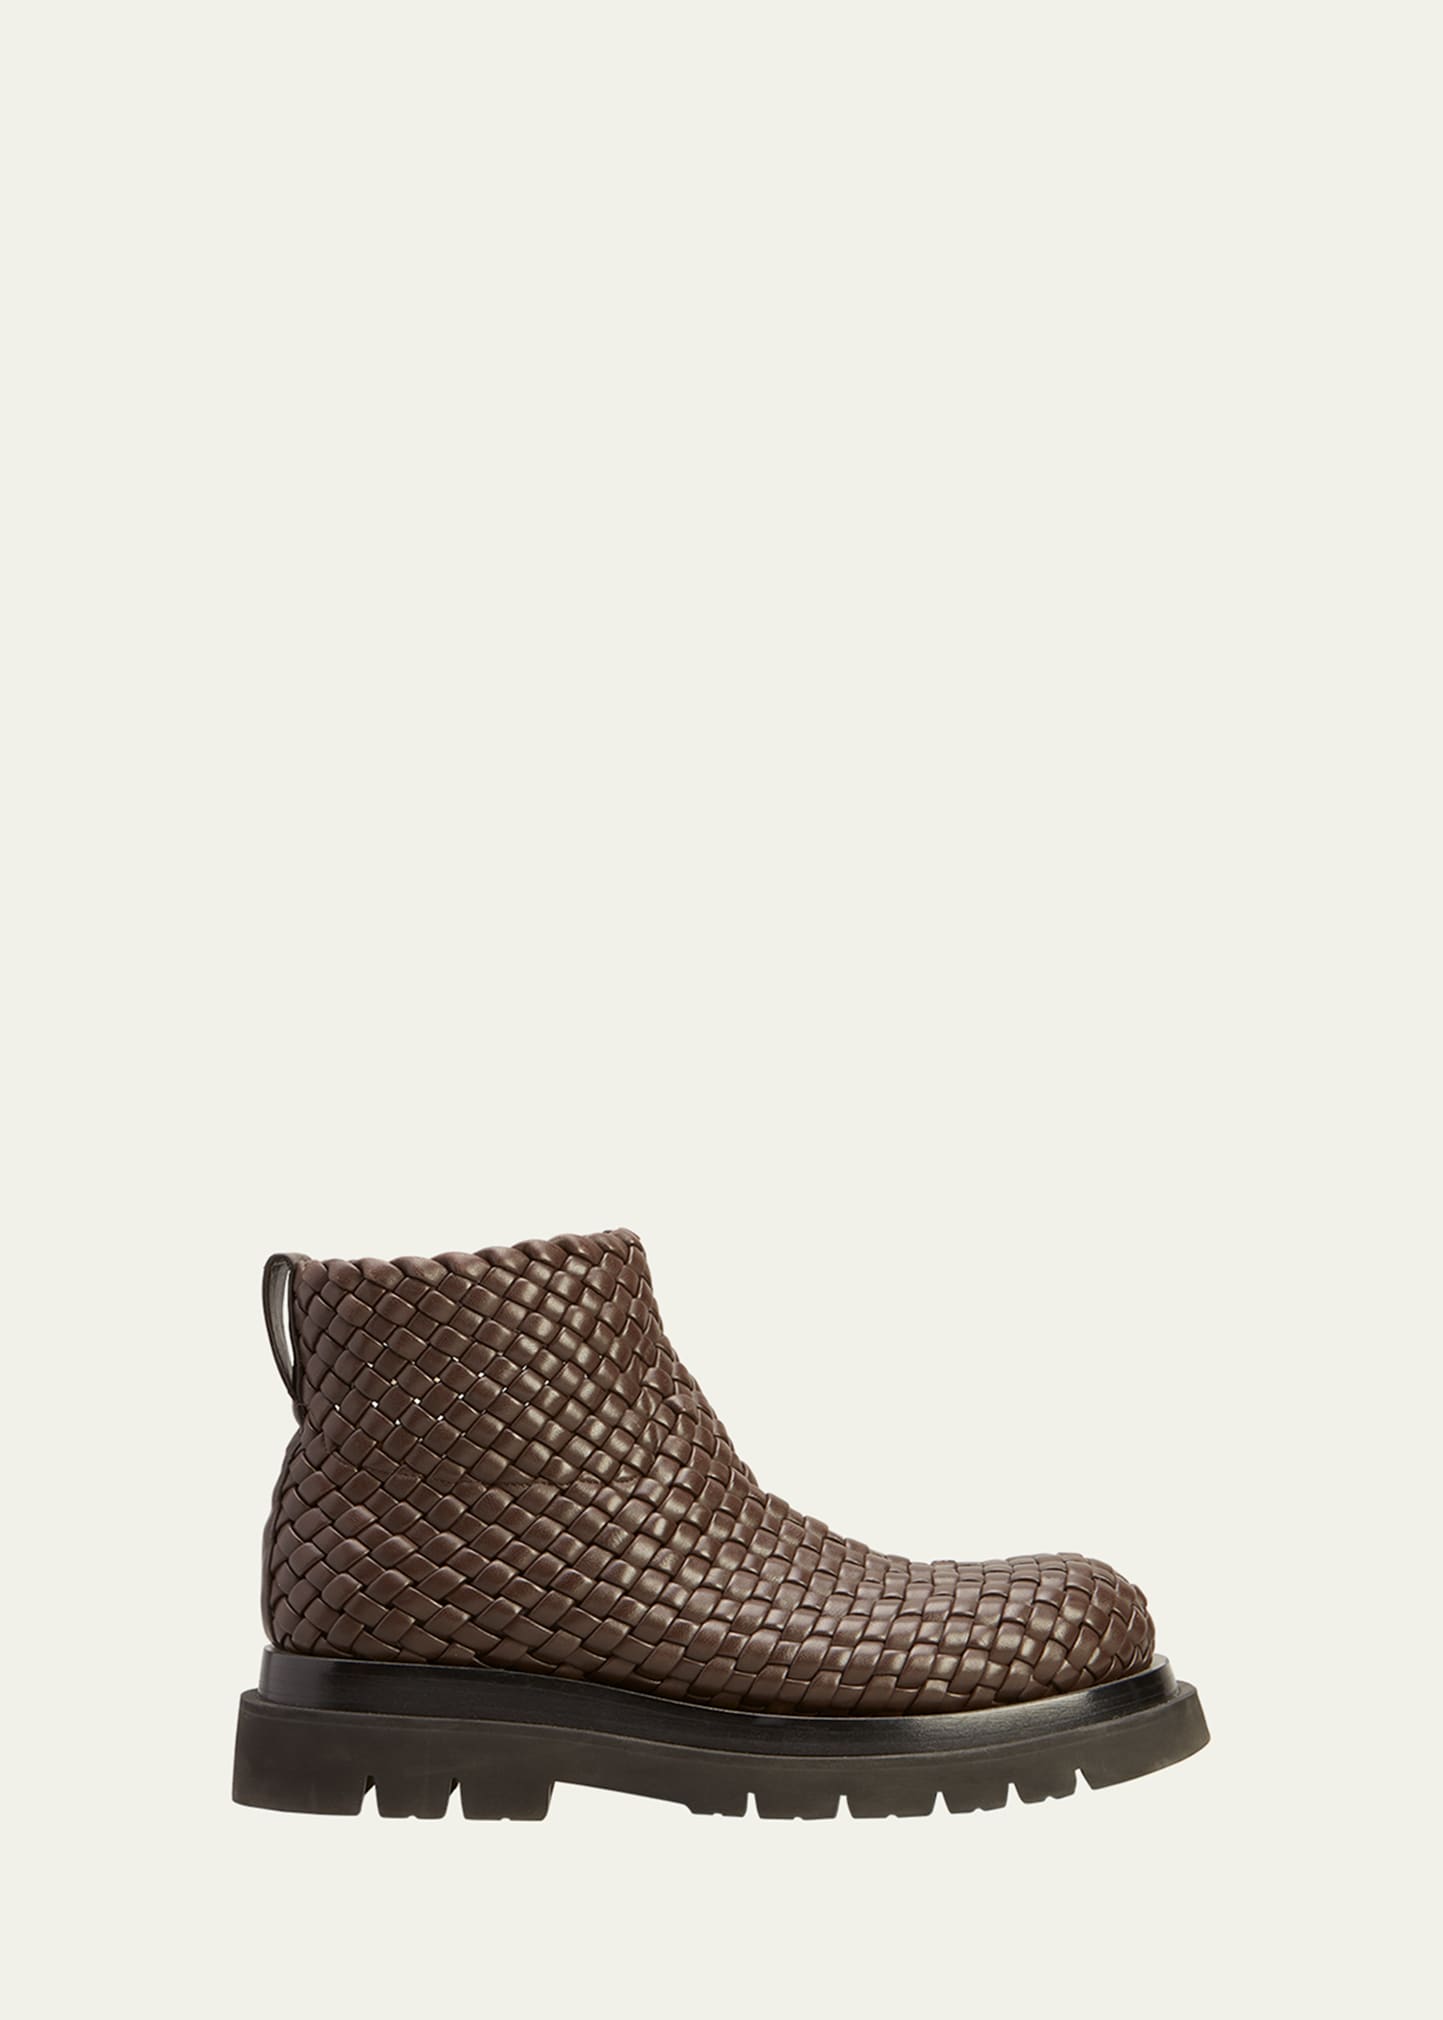 Bottega Veneta Men's Lug-Sole Woven Leather Ankle Boots